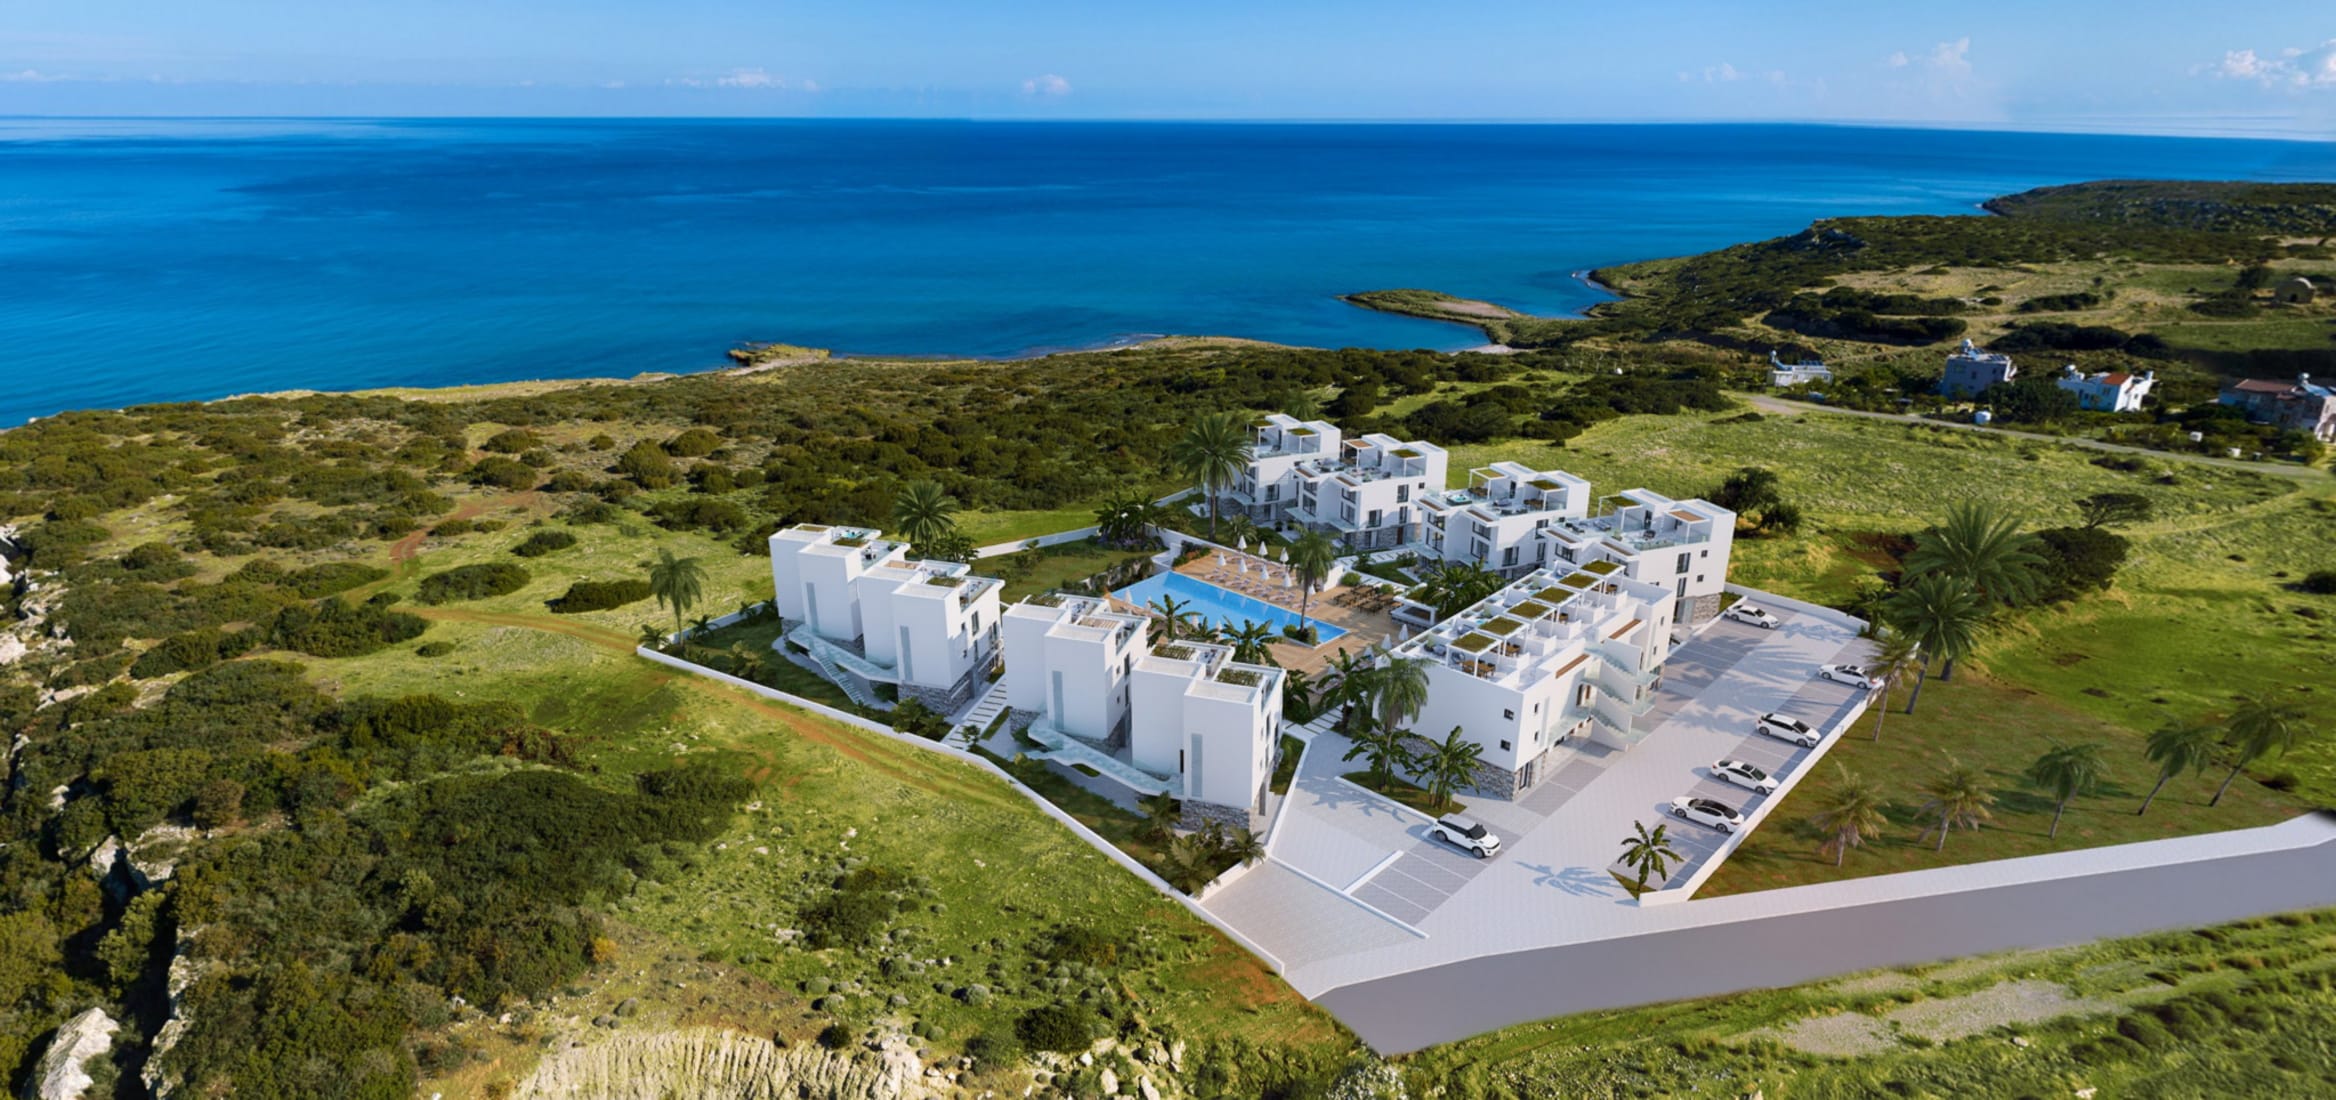 Investering vakantiehuis Noord-Cyprus